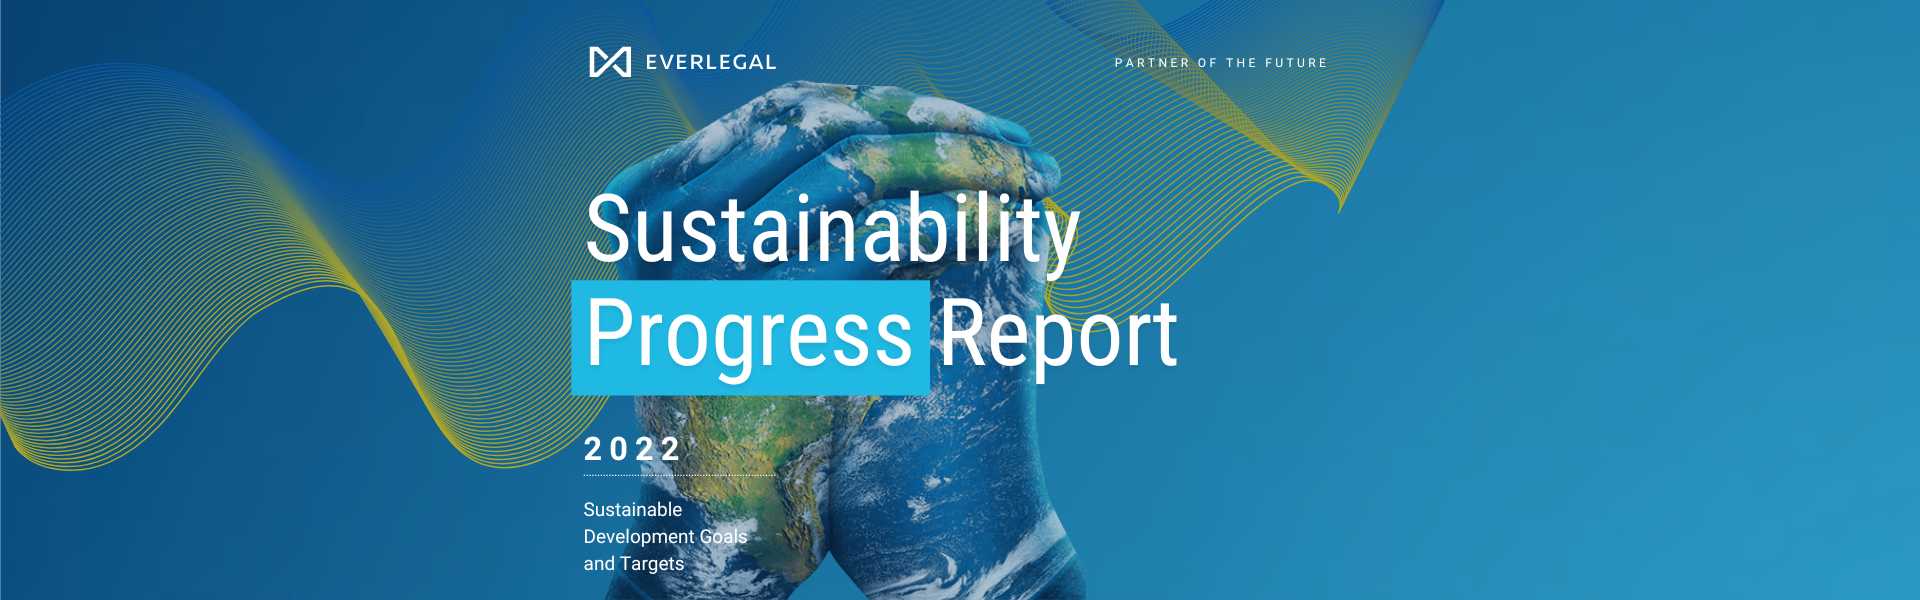 EVERLEGAL Sustainability Progress Report 2022 